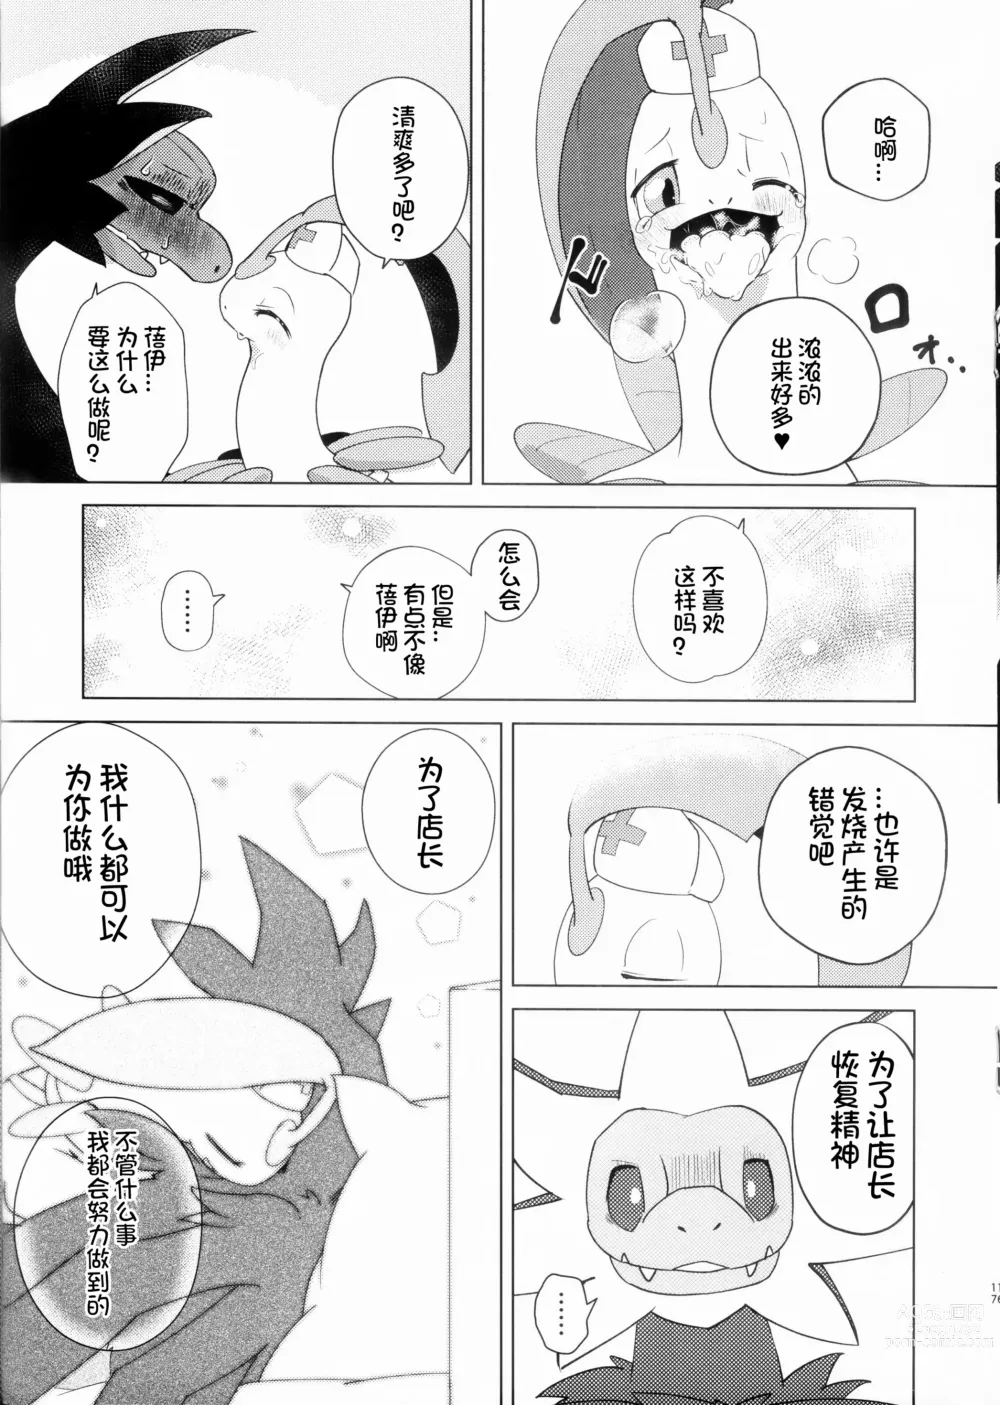 Page 17 of doujinshi 生姜◇柠檬茶